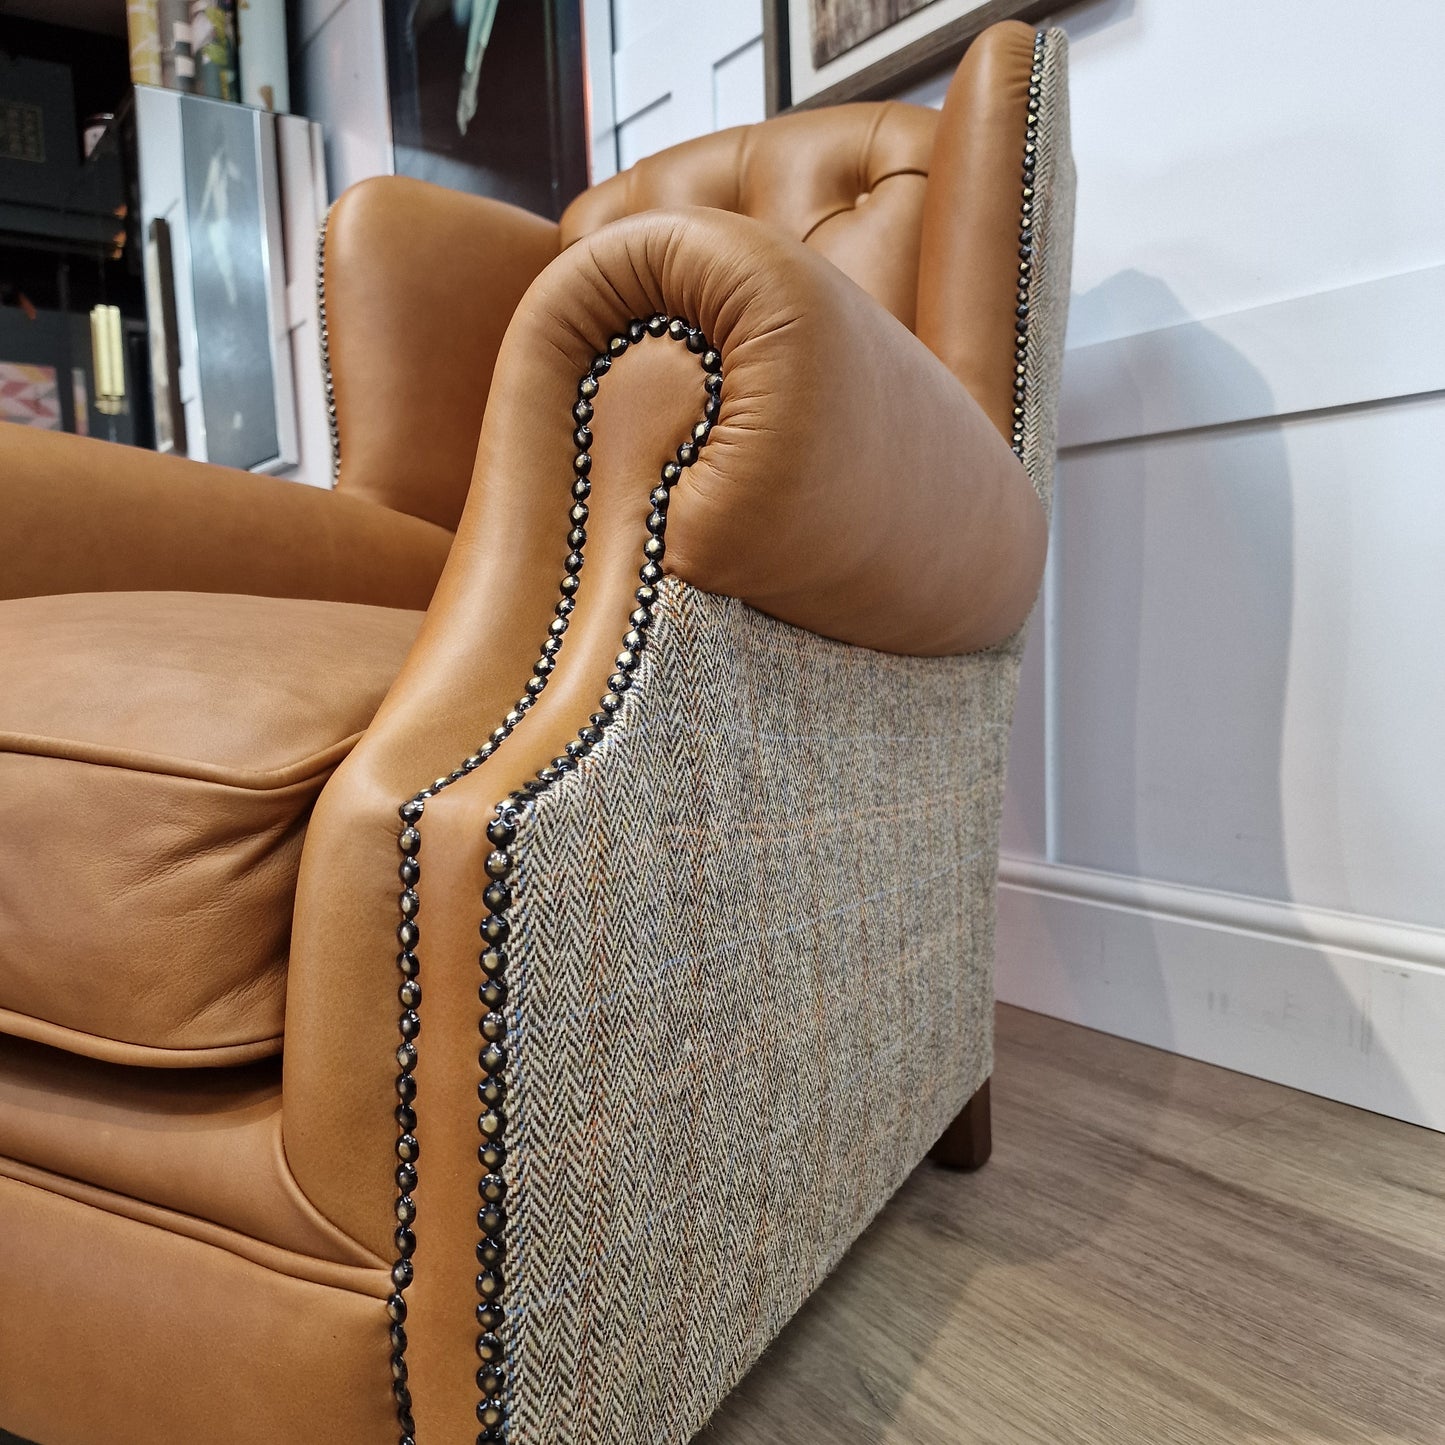 Oskar Harris Tweed And Leather Armchair | Multiple Options - Rydan Interiors